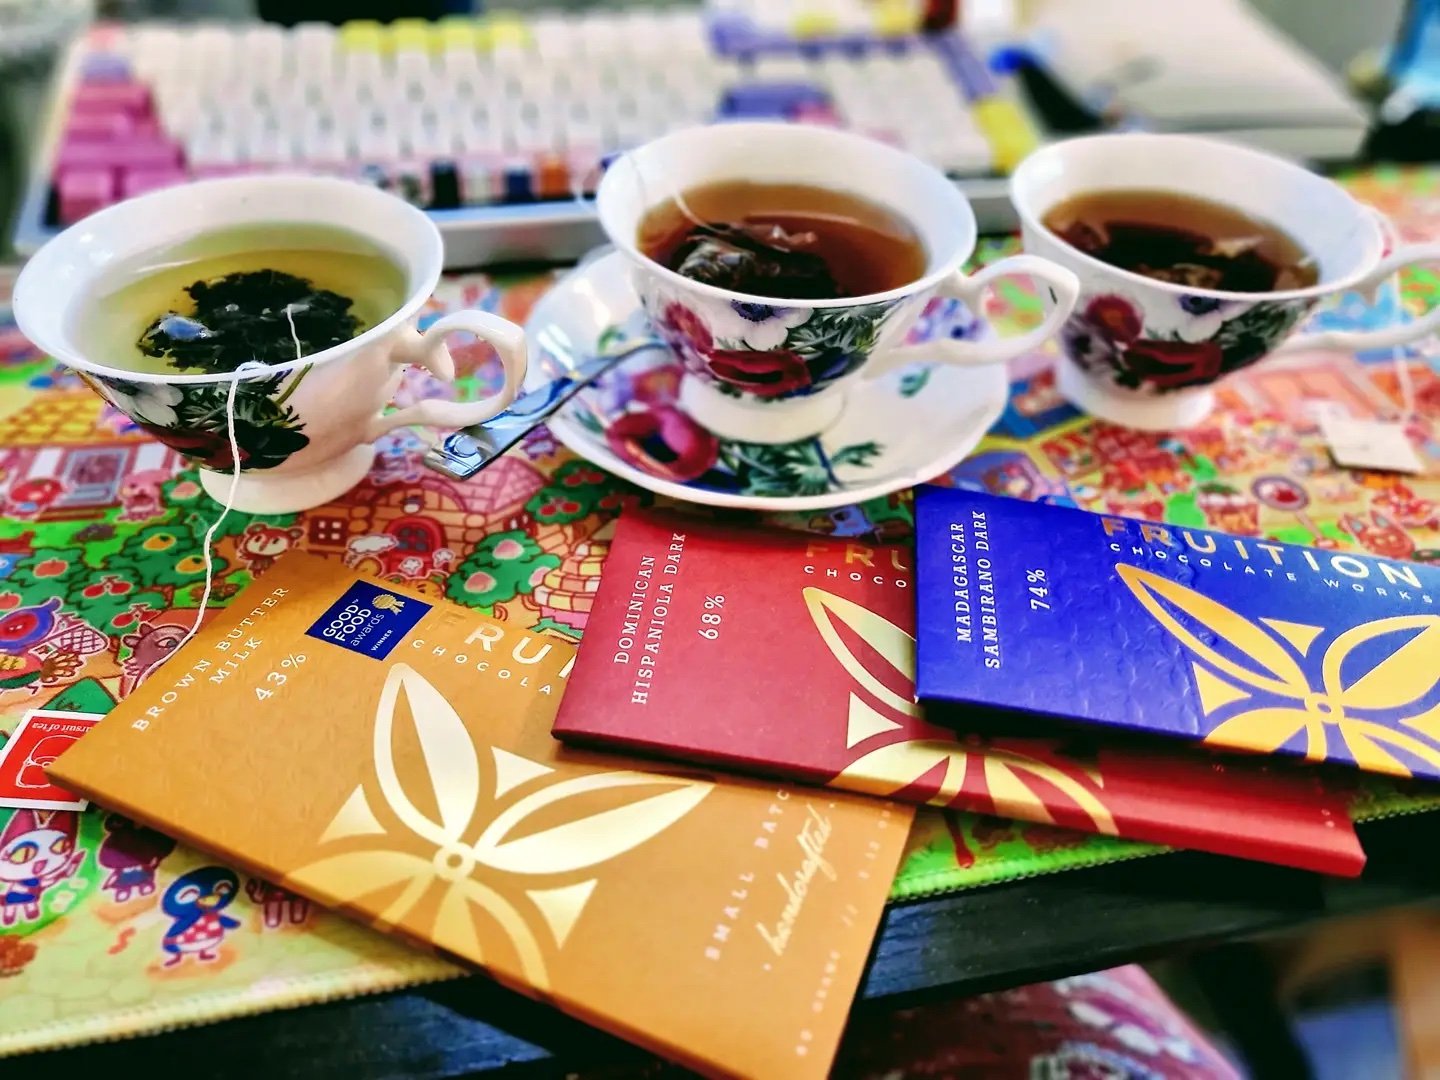 Tea-Cups-Chocolate-Packaging-Placemat.jpg